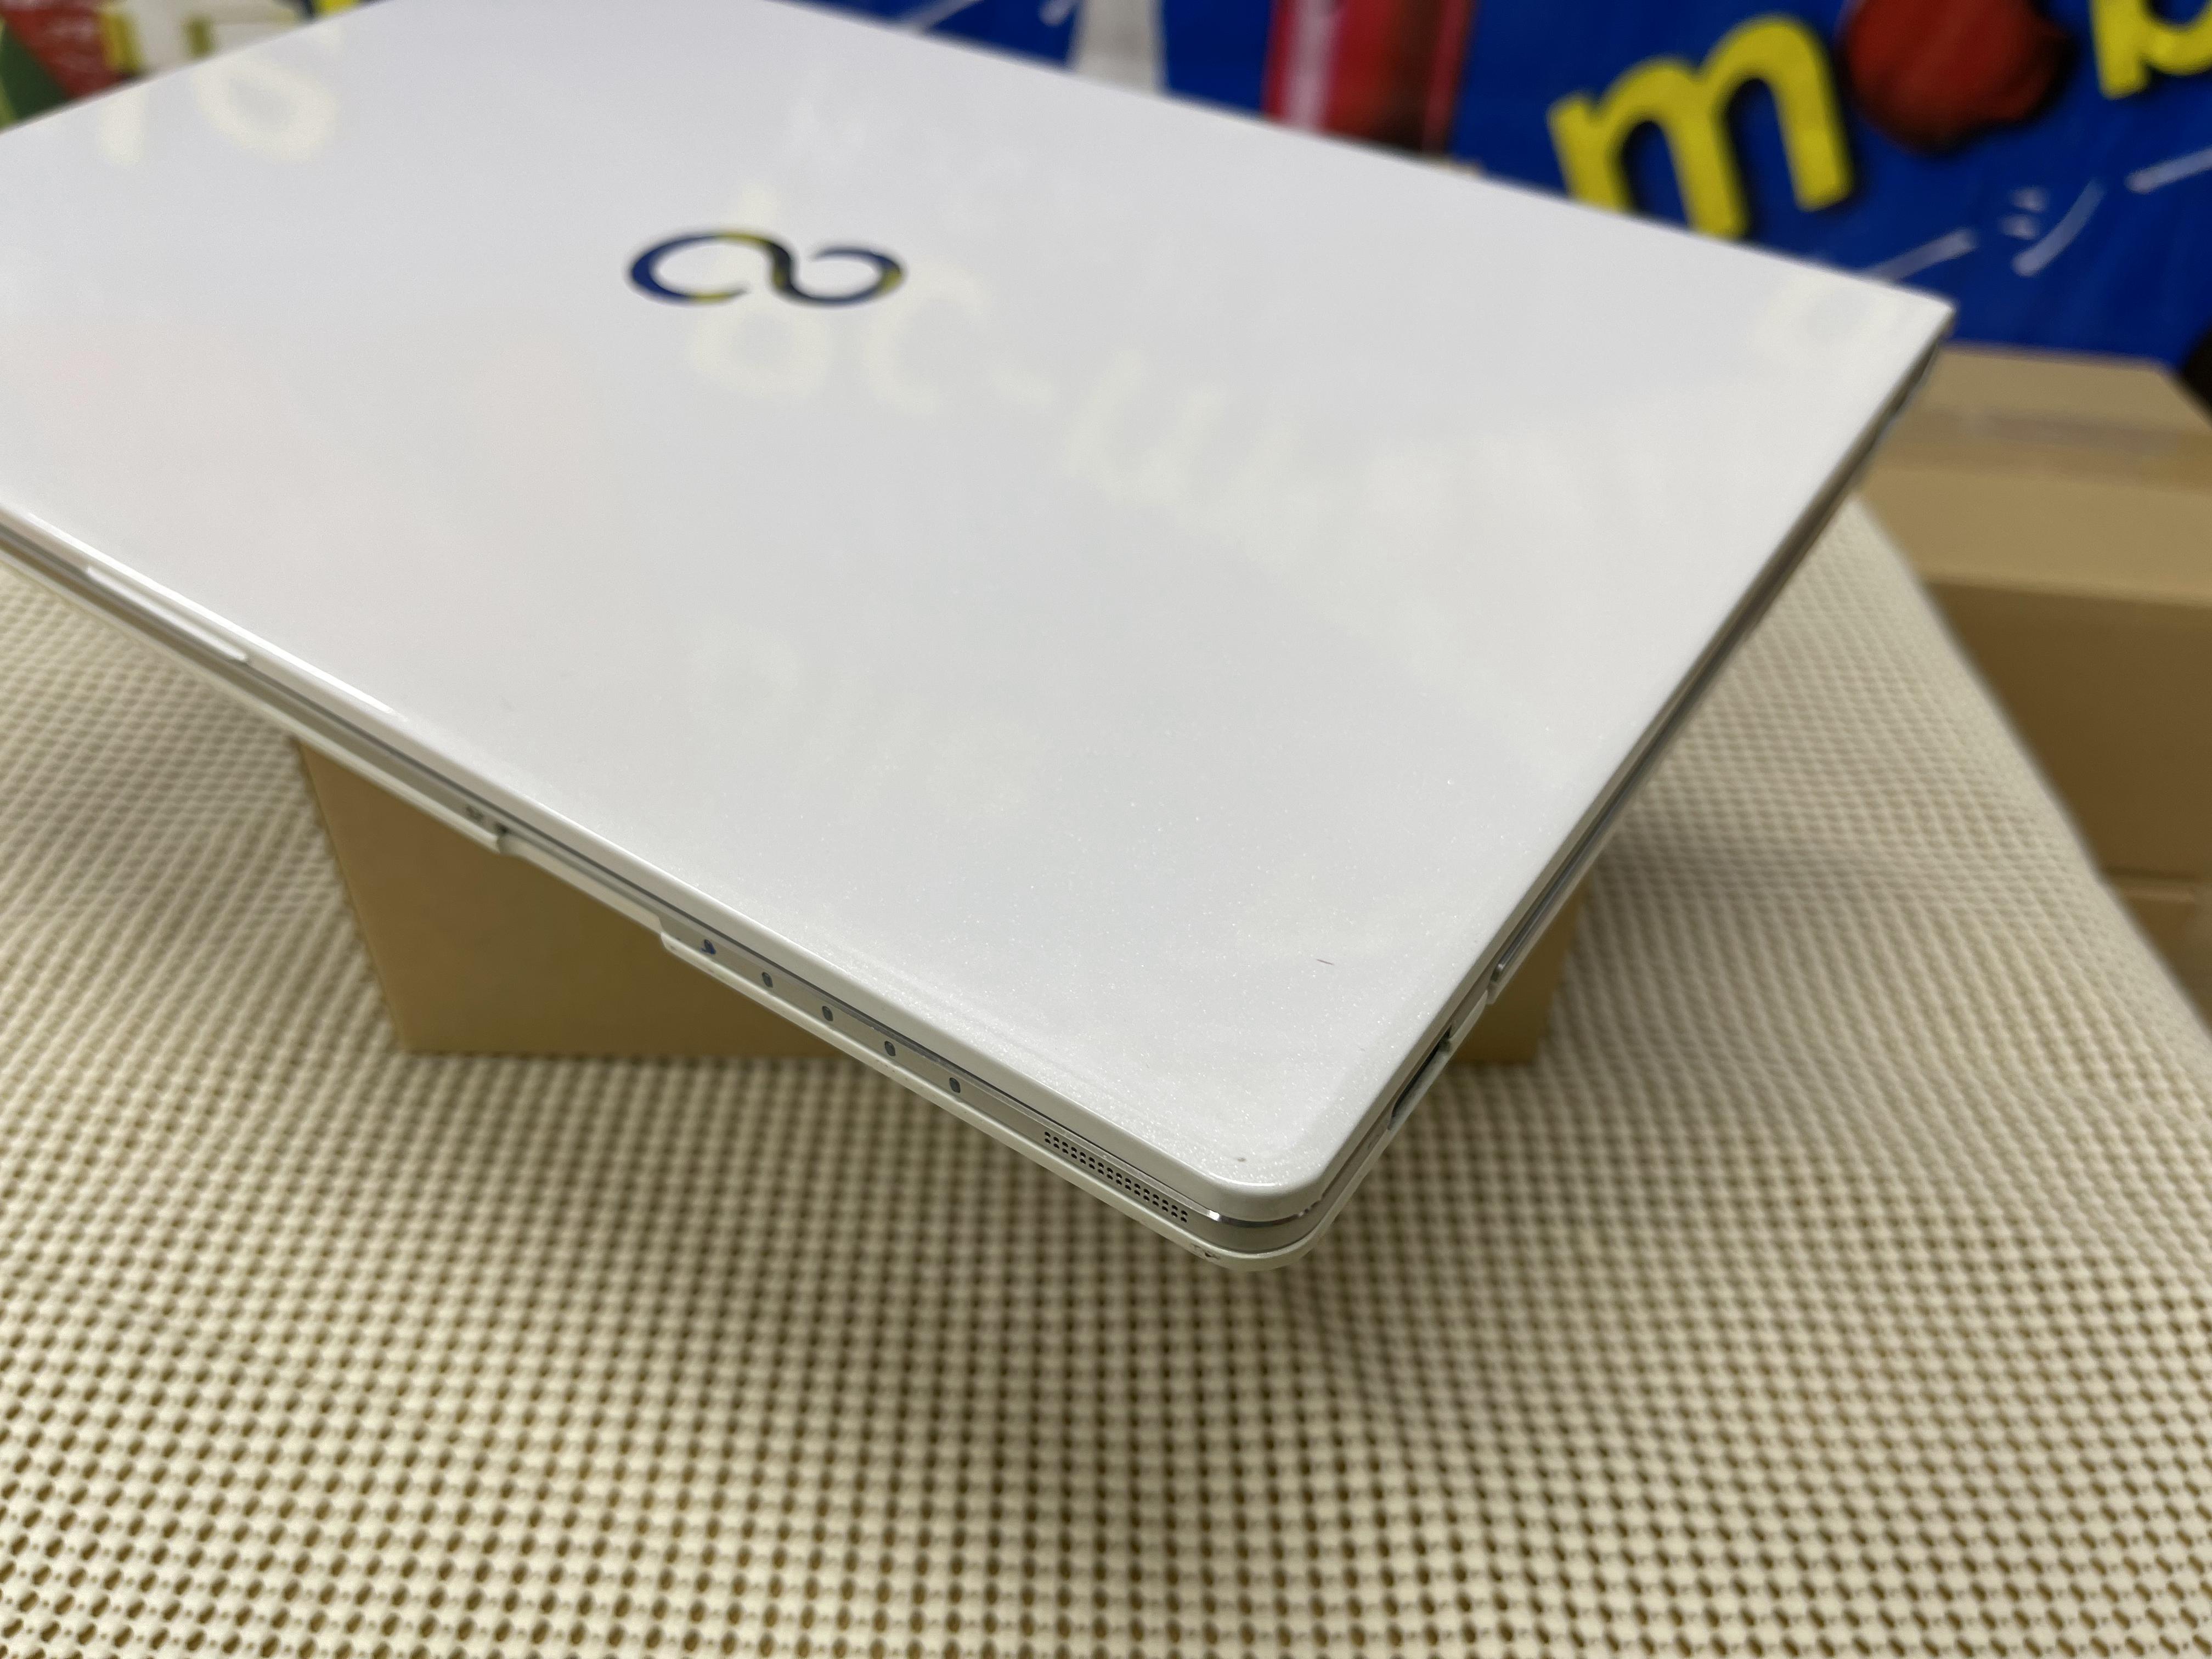 FUJITSU LifeBook SH75 Mode 2017 Gen 7 /13.3 inch Full HD (59Hz 